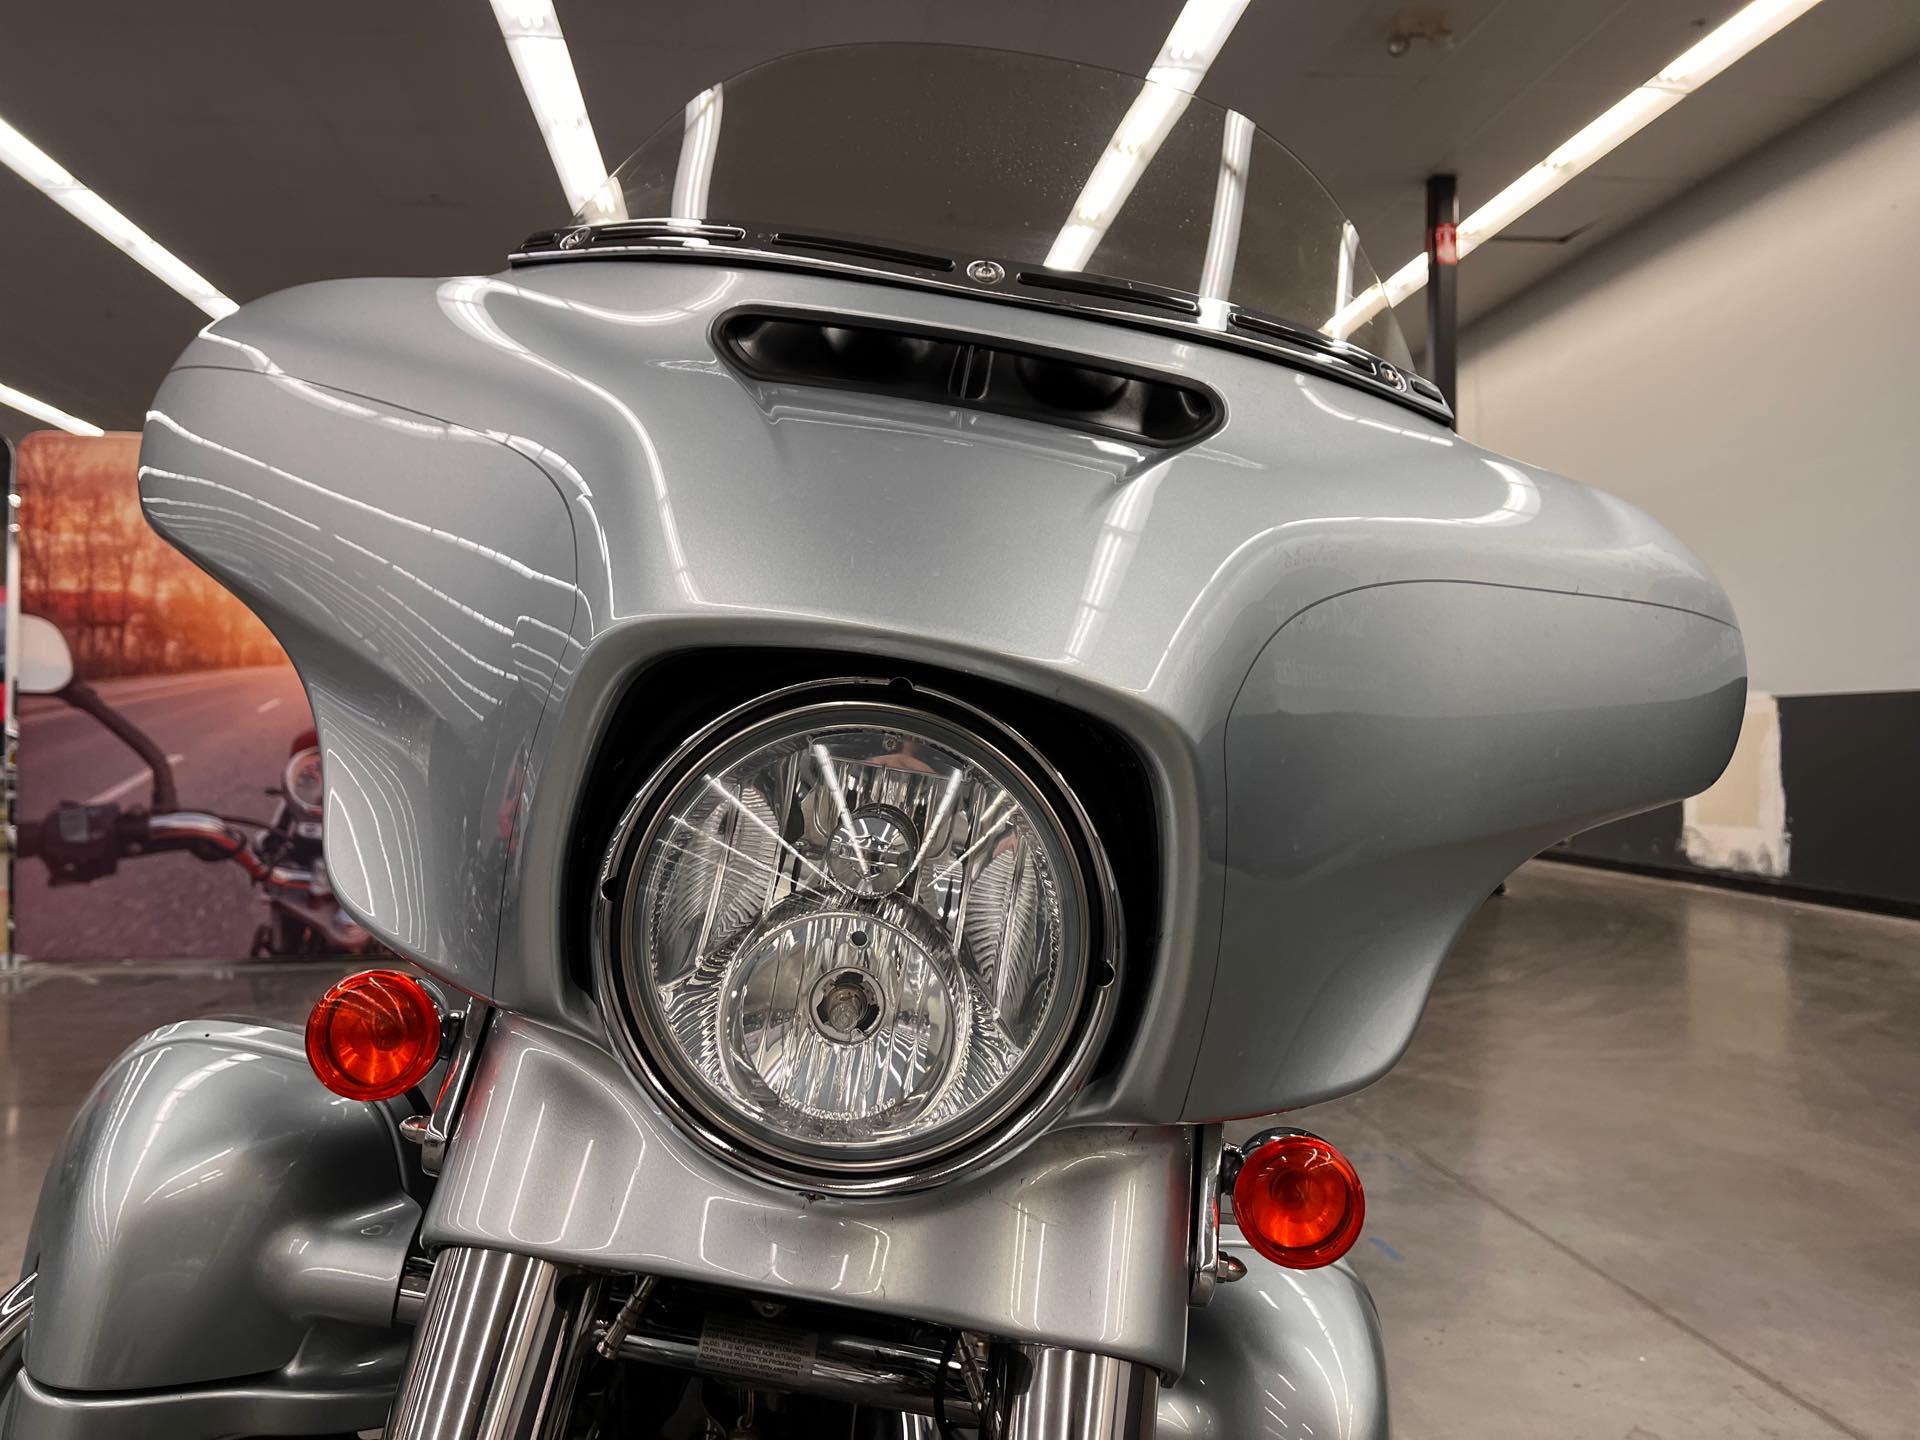 2015 Harley-Davidson Street Glide Special at Aces Motorcycles - Denver